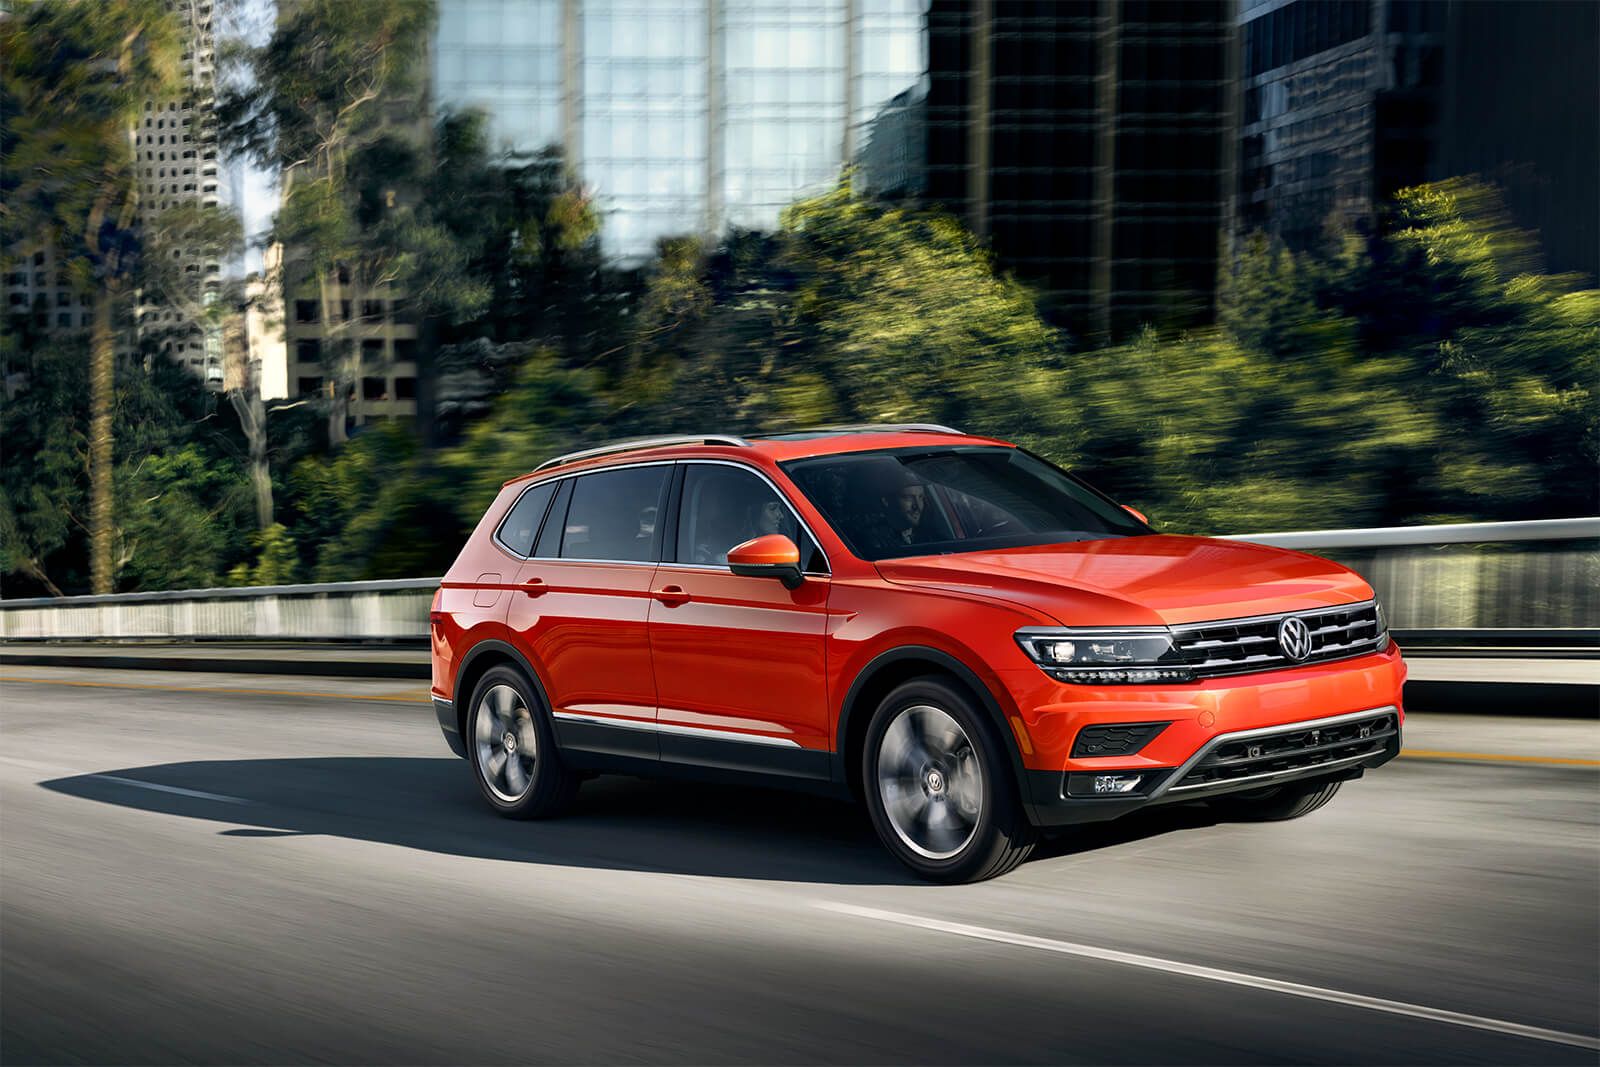 2020 Volkswagen Tiguan Review, Pricing, and Specs